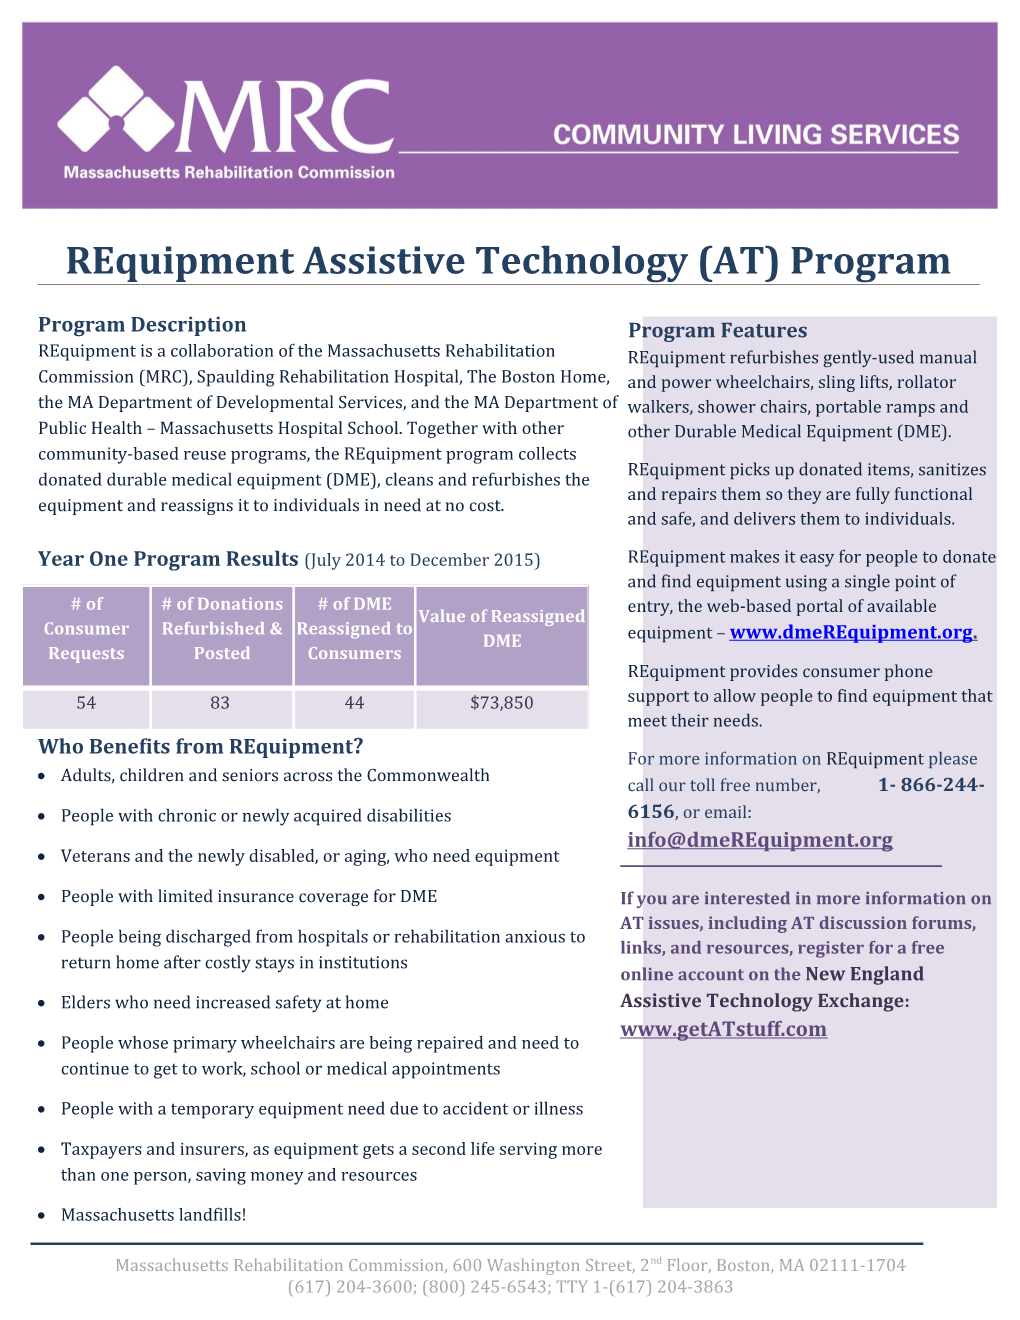 Requipment Assistive Technology (AT) Program